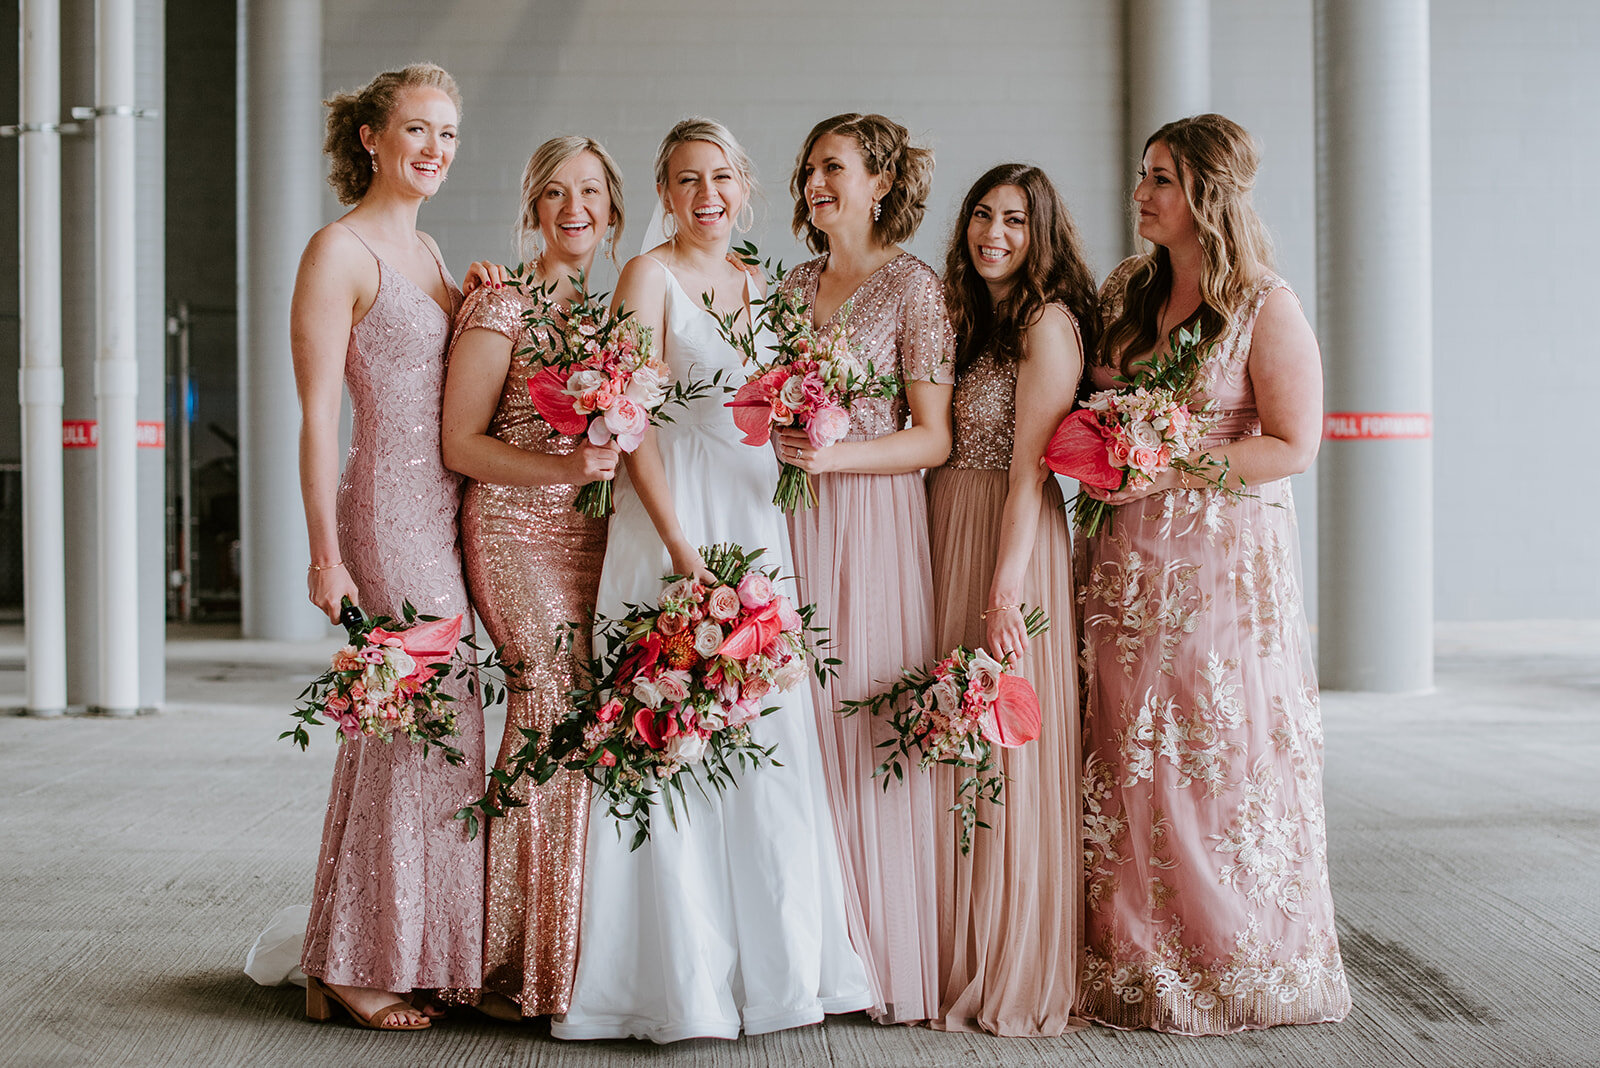 Clayhousephotography-ohio-wedding-photographer-girls -6_websize.jpg